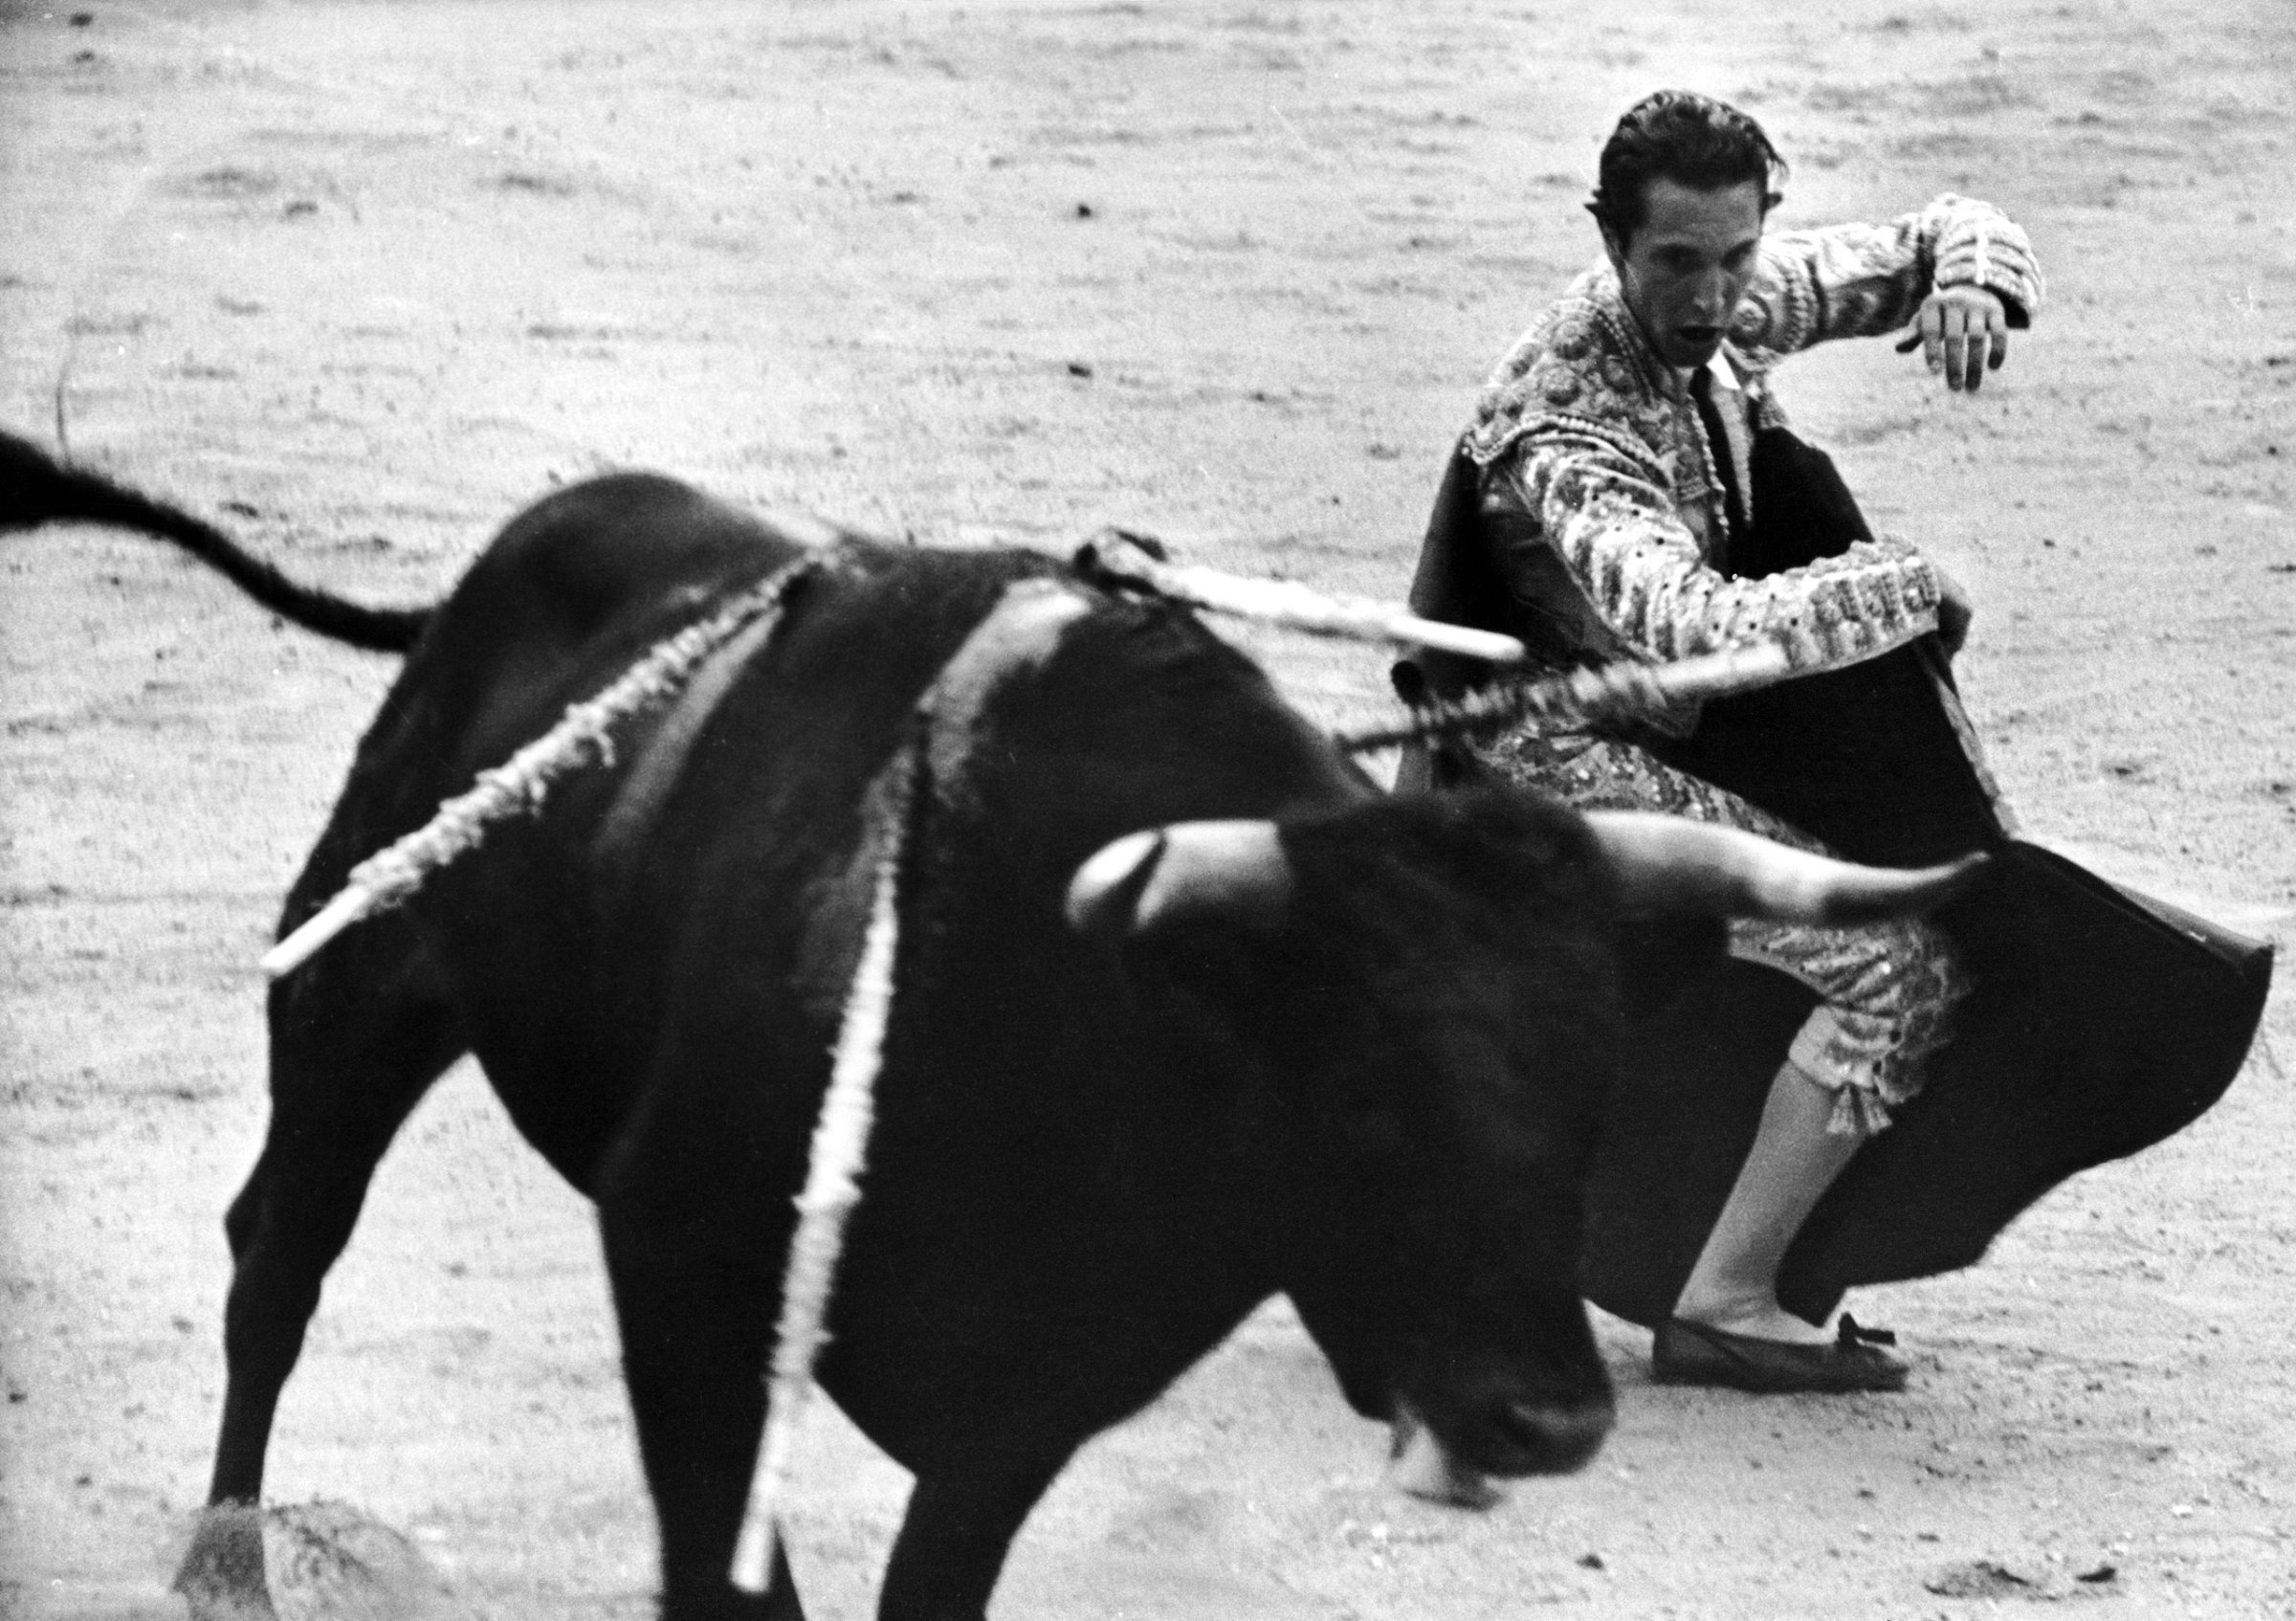 Matador Julian Marin and bull in the ring during a bullfight celebrating the Fiesta de San Fermín.